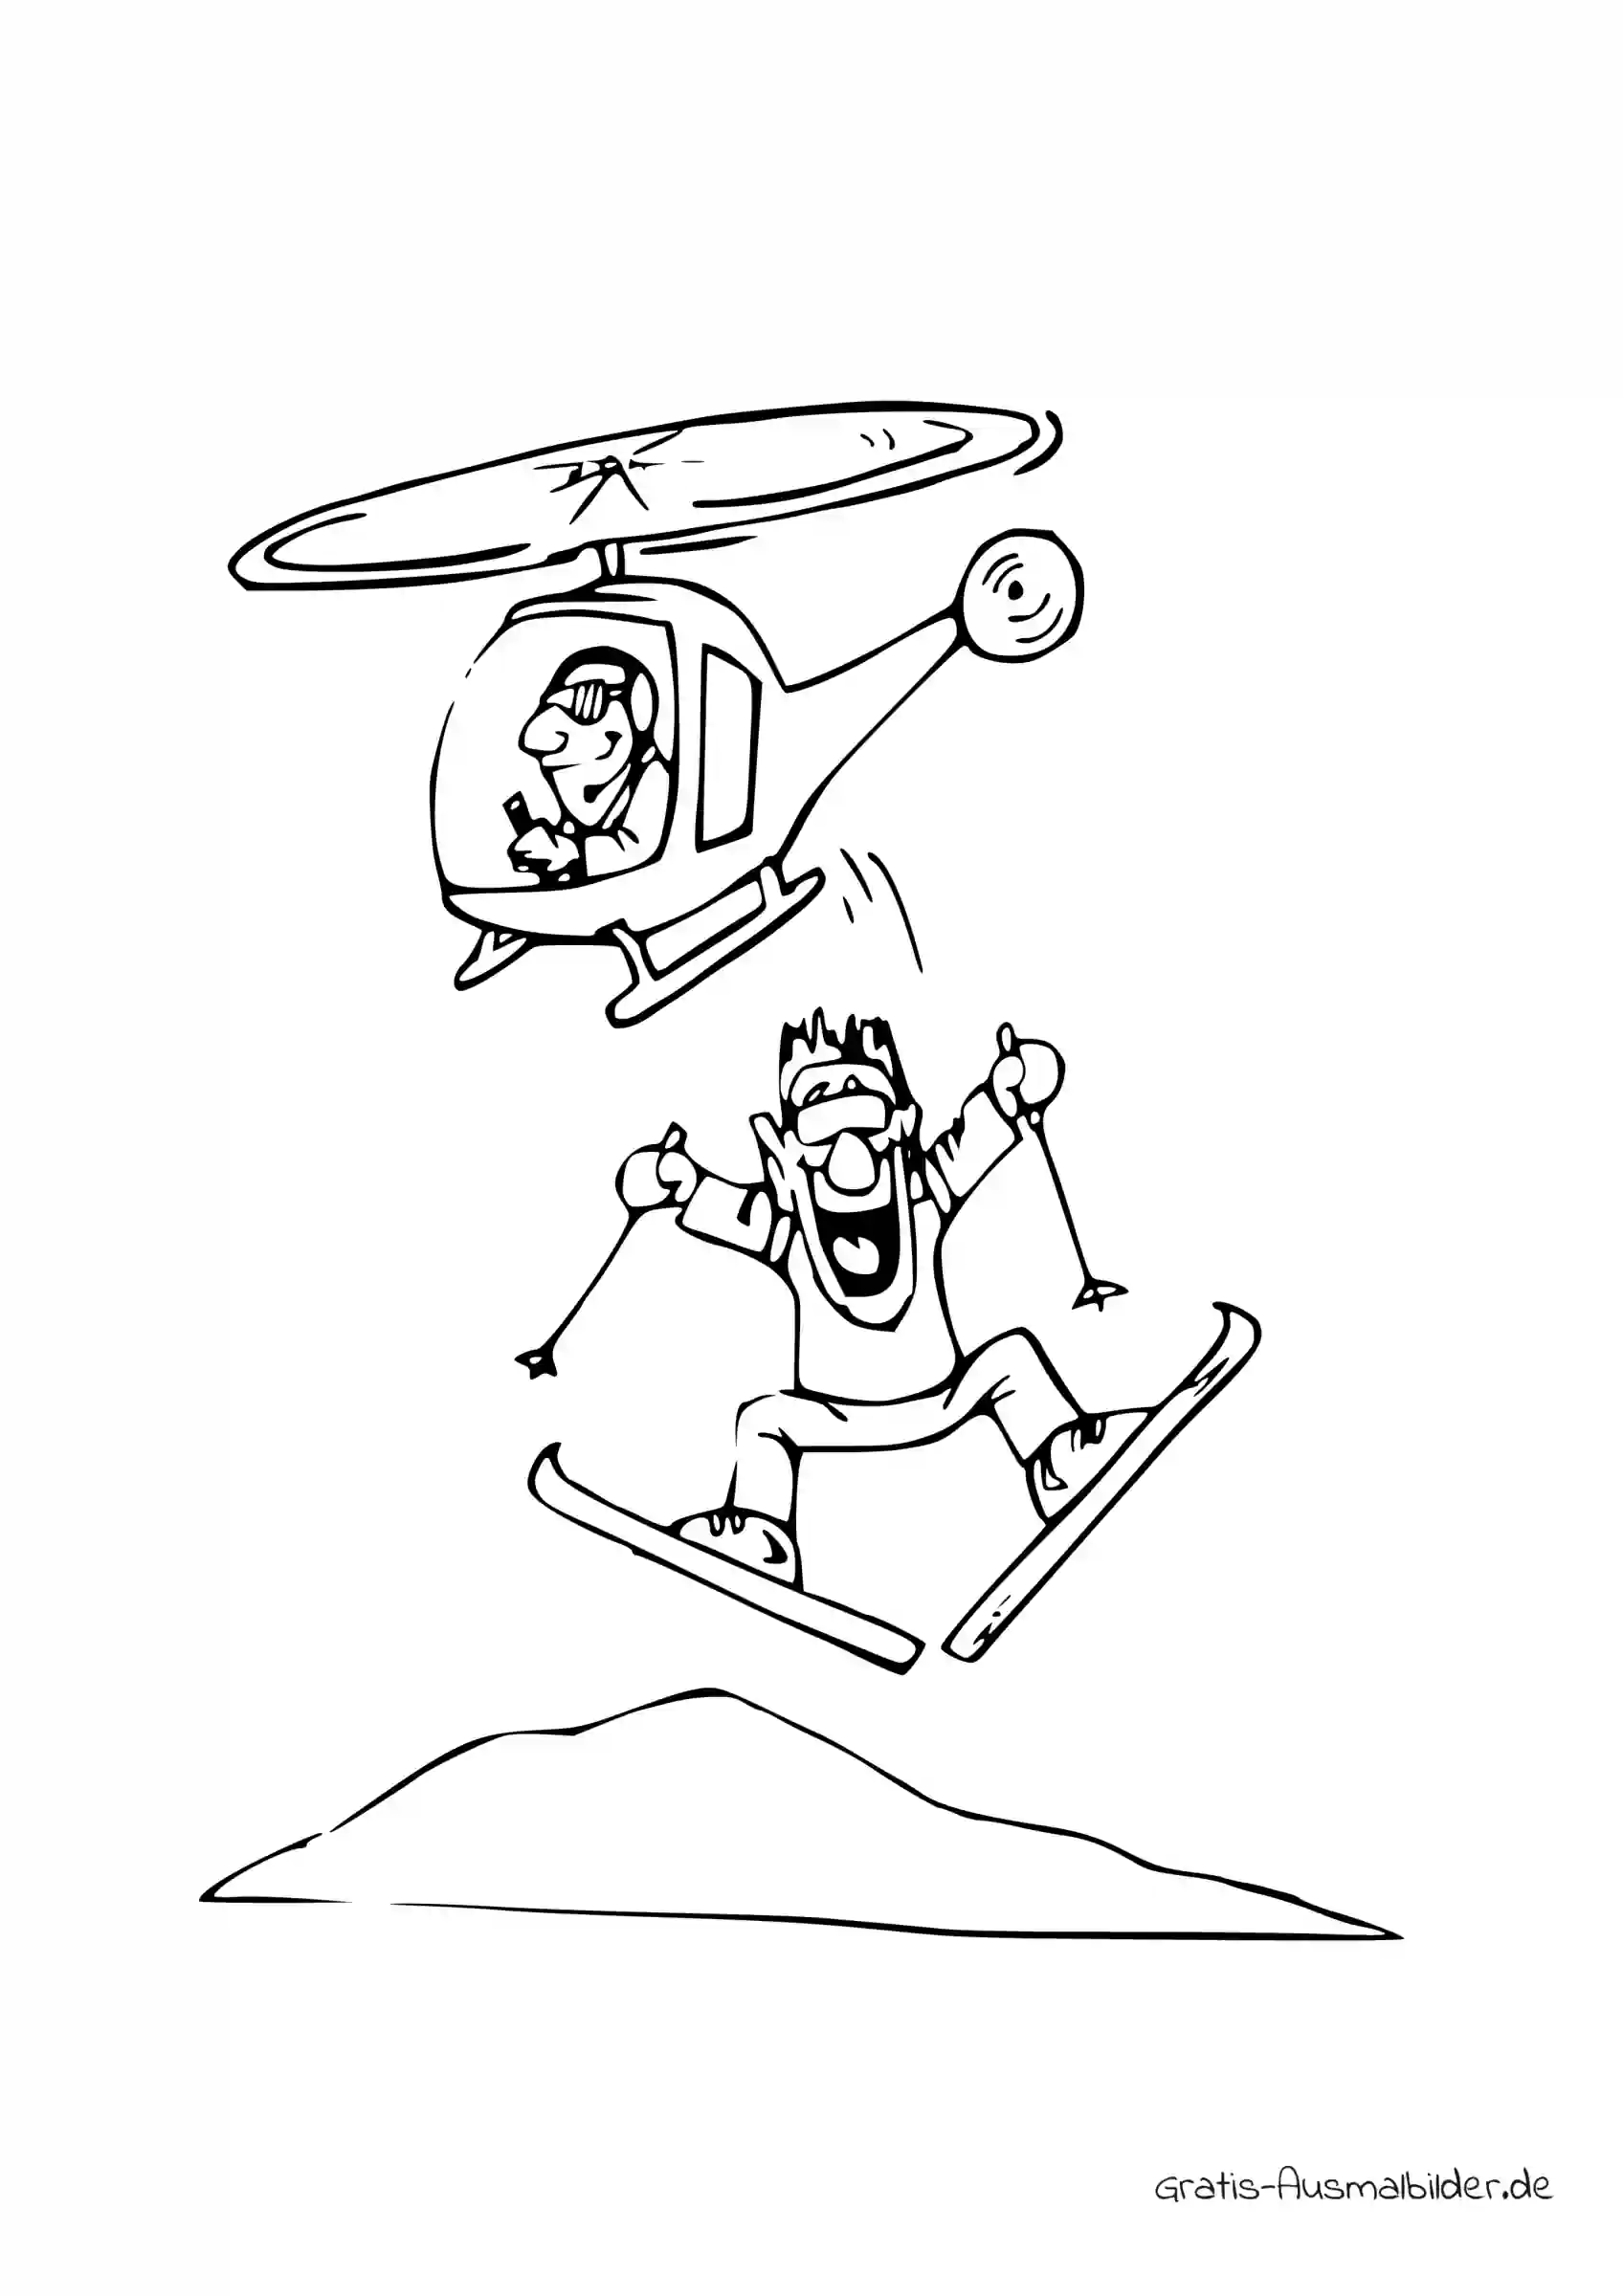 Ausmalbild Skifahrer springt Helikopter